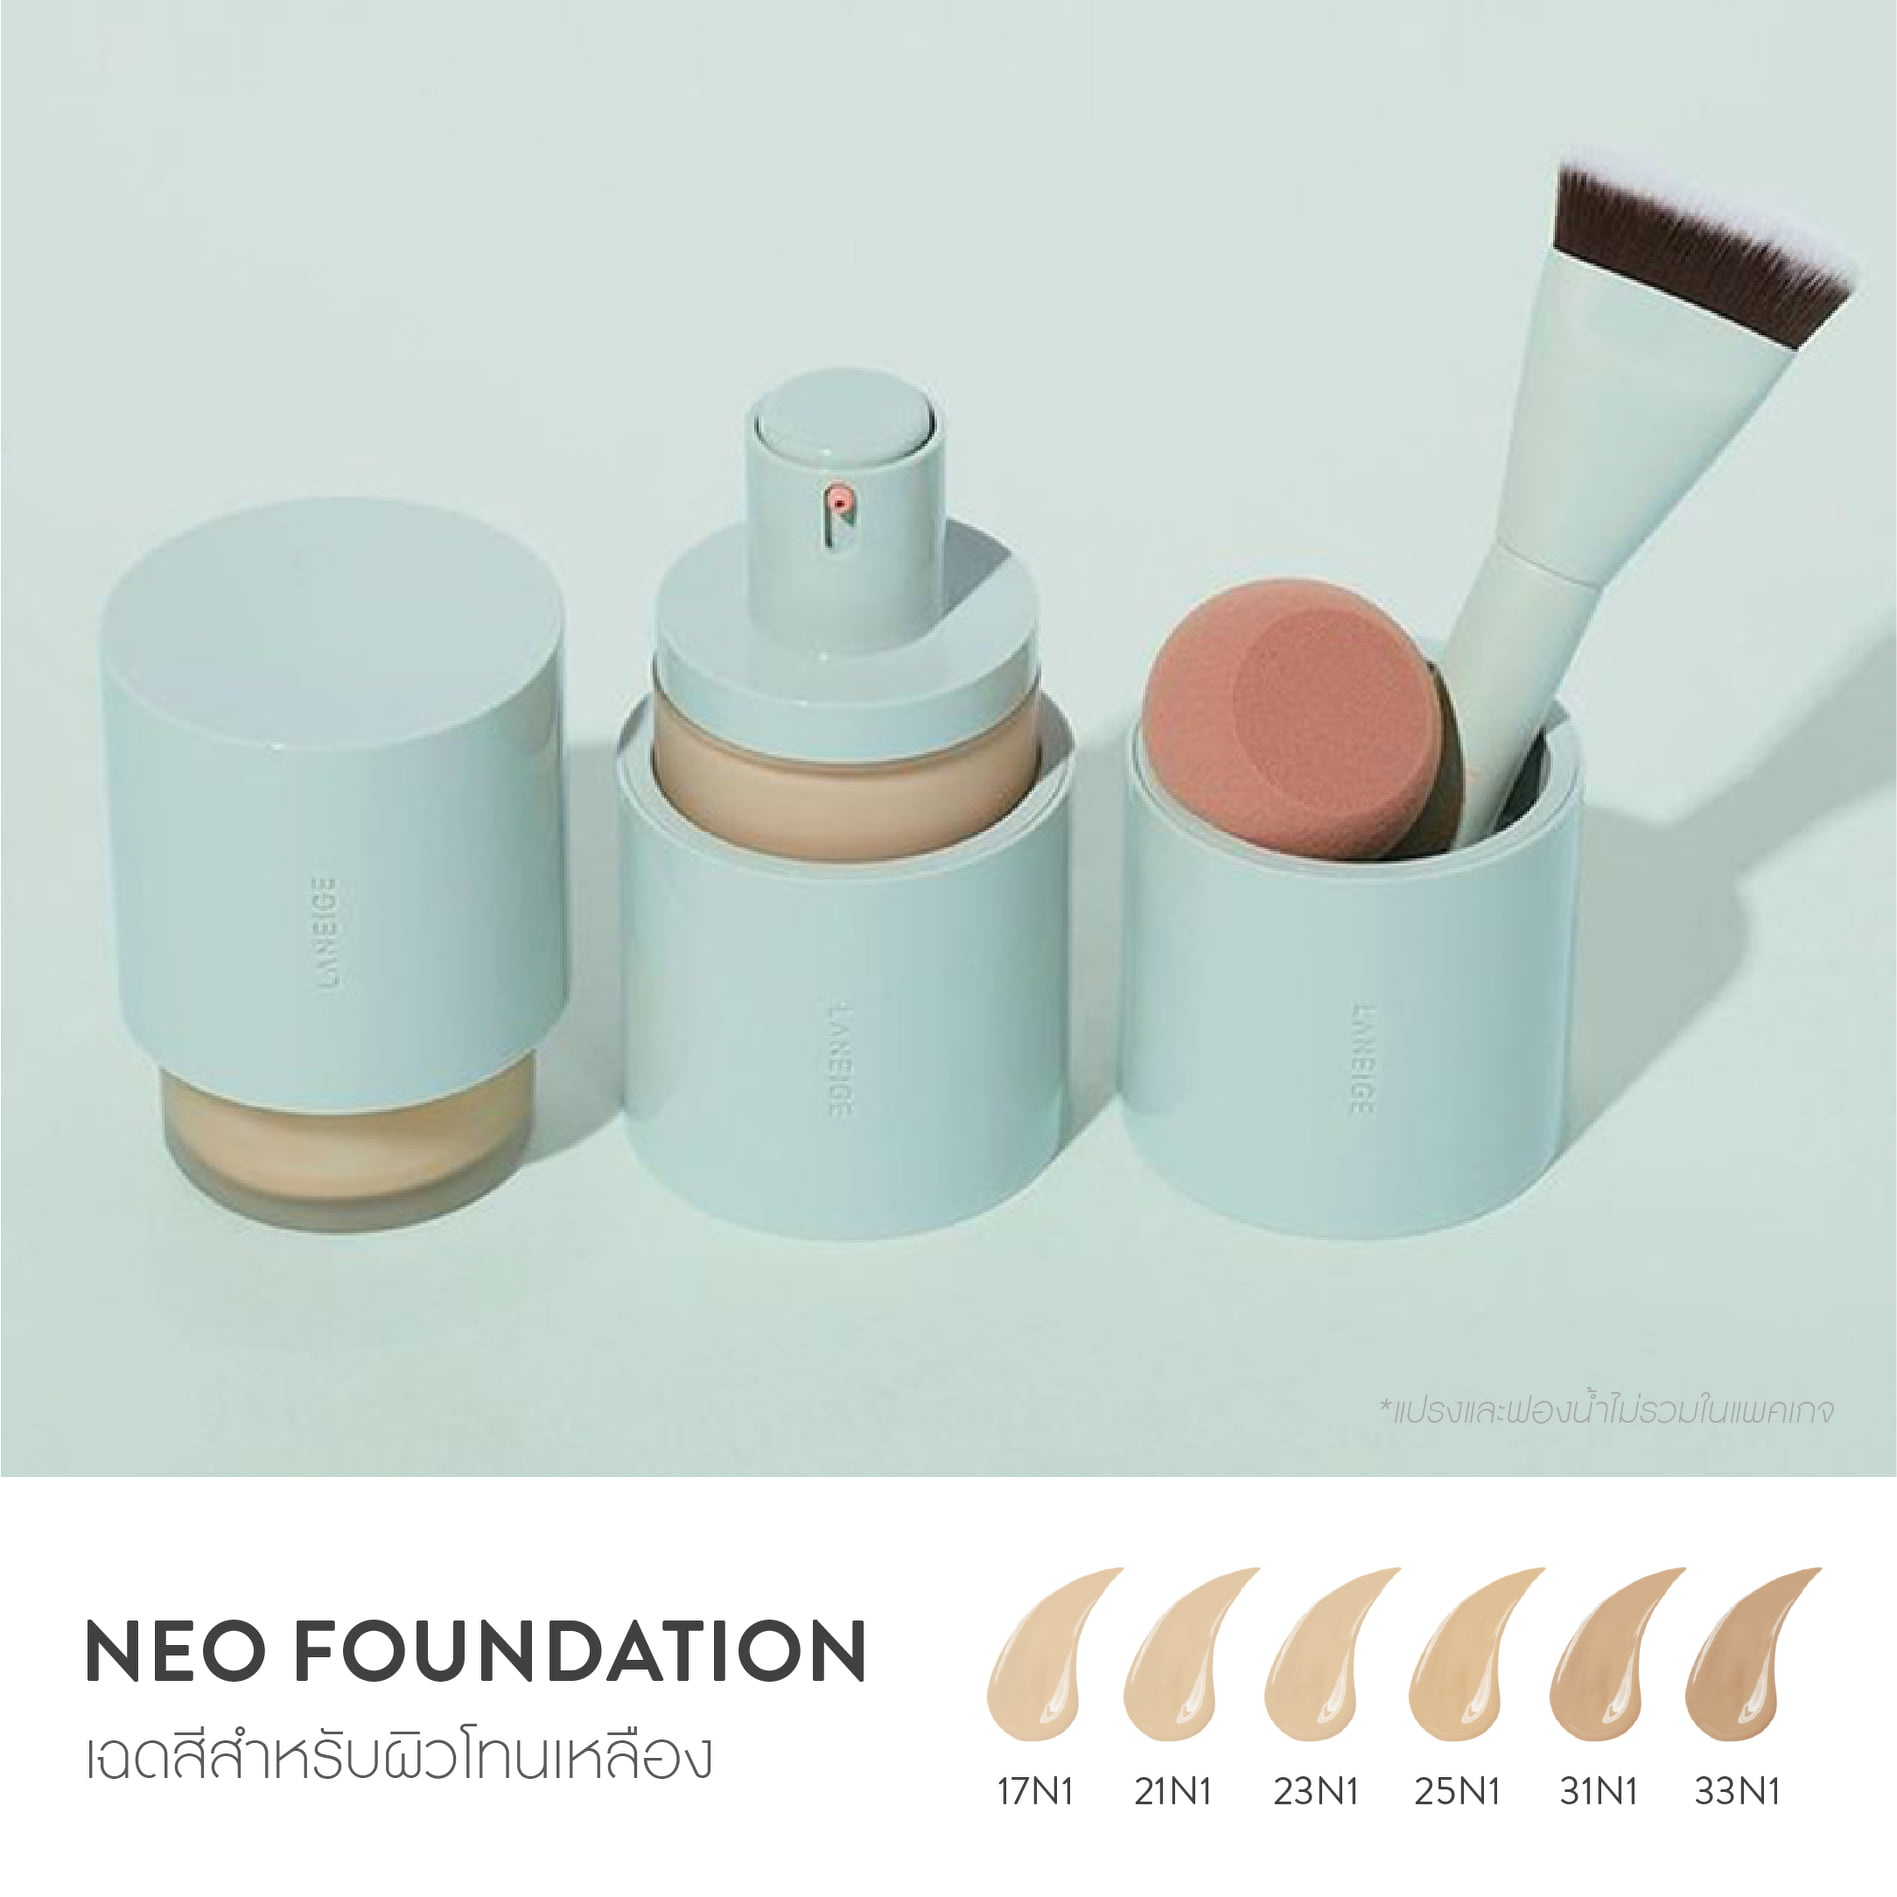  Laneige Neo Foundation Matte SPF16 PA++ 30 ml  เฉดสีมากมายที่ตอบโจทย์สาวเอเชียเป็นที่สุด  